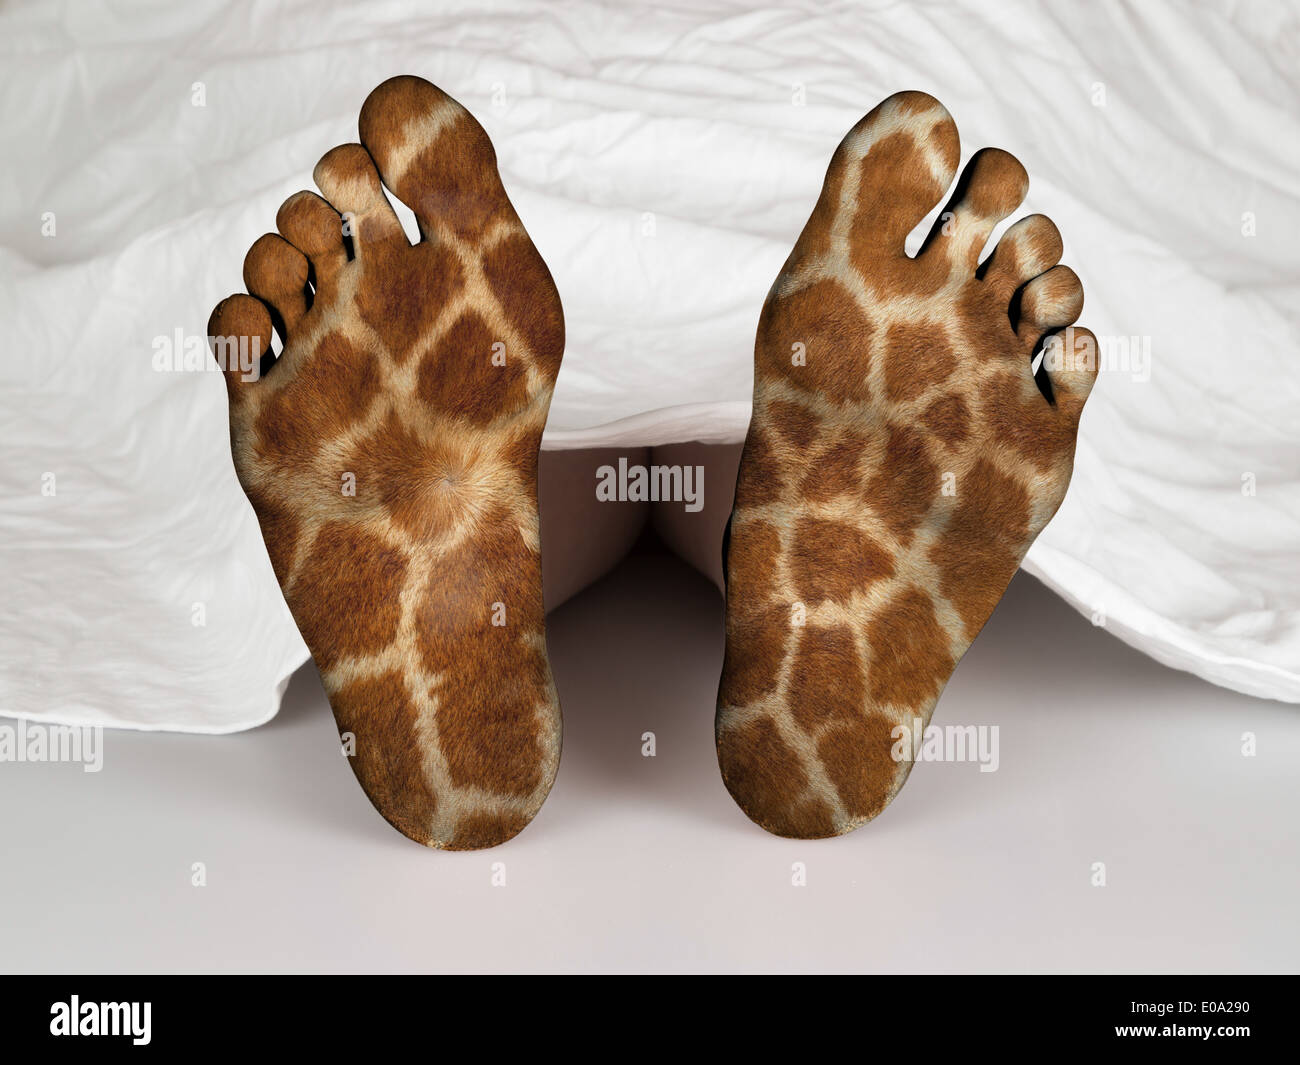 Dead body under a white sheet  concept of sleeping or death  giraffe print Stock Photo